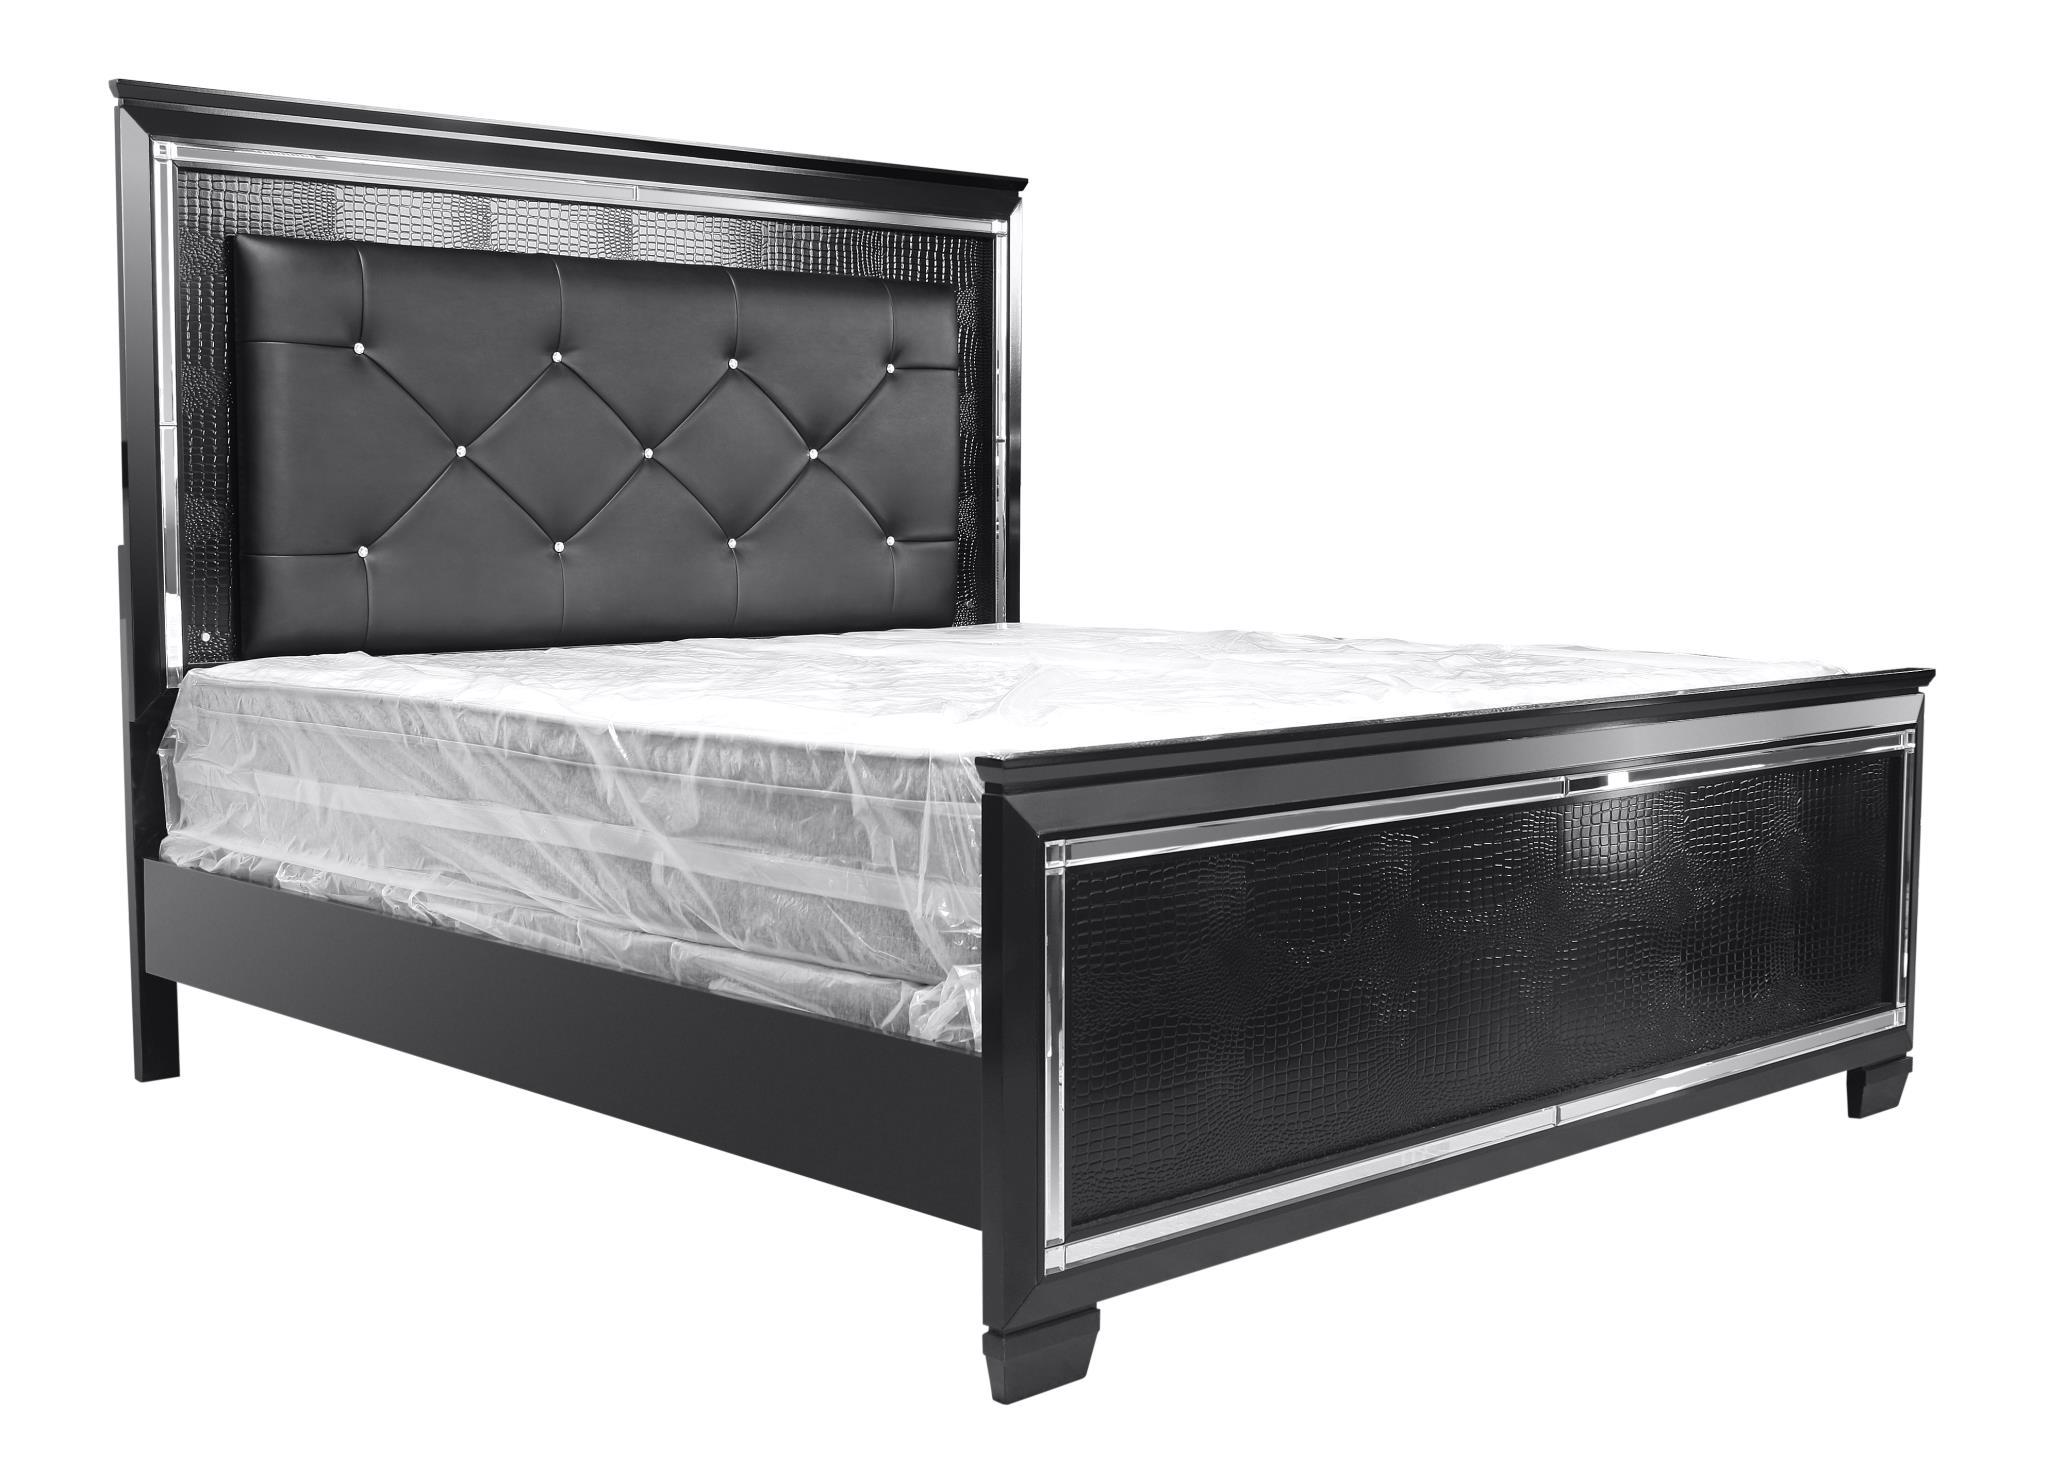 

    
MYCO Furniture MA705-K Martina Black Diamond Tufted King Panel Bedroom Set 5Pcs w/Led Lights
